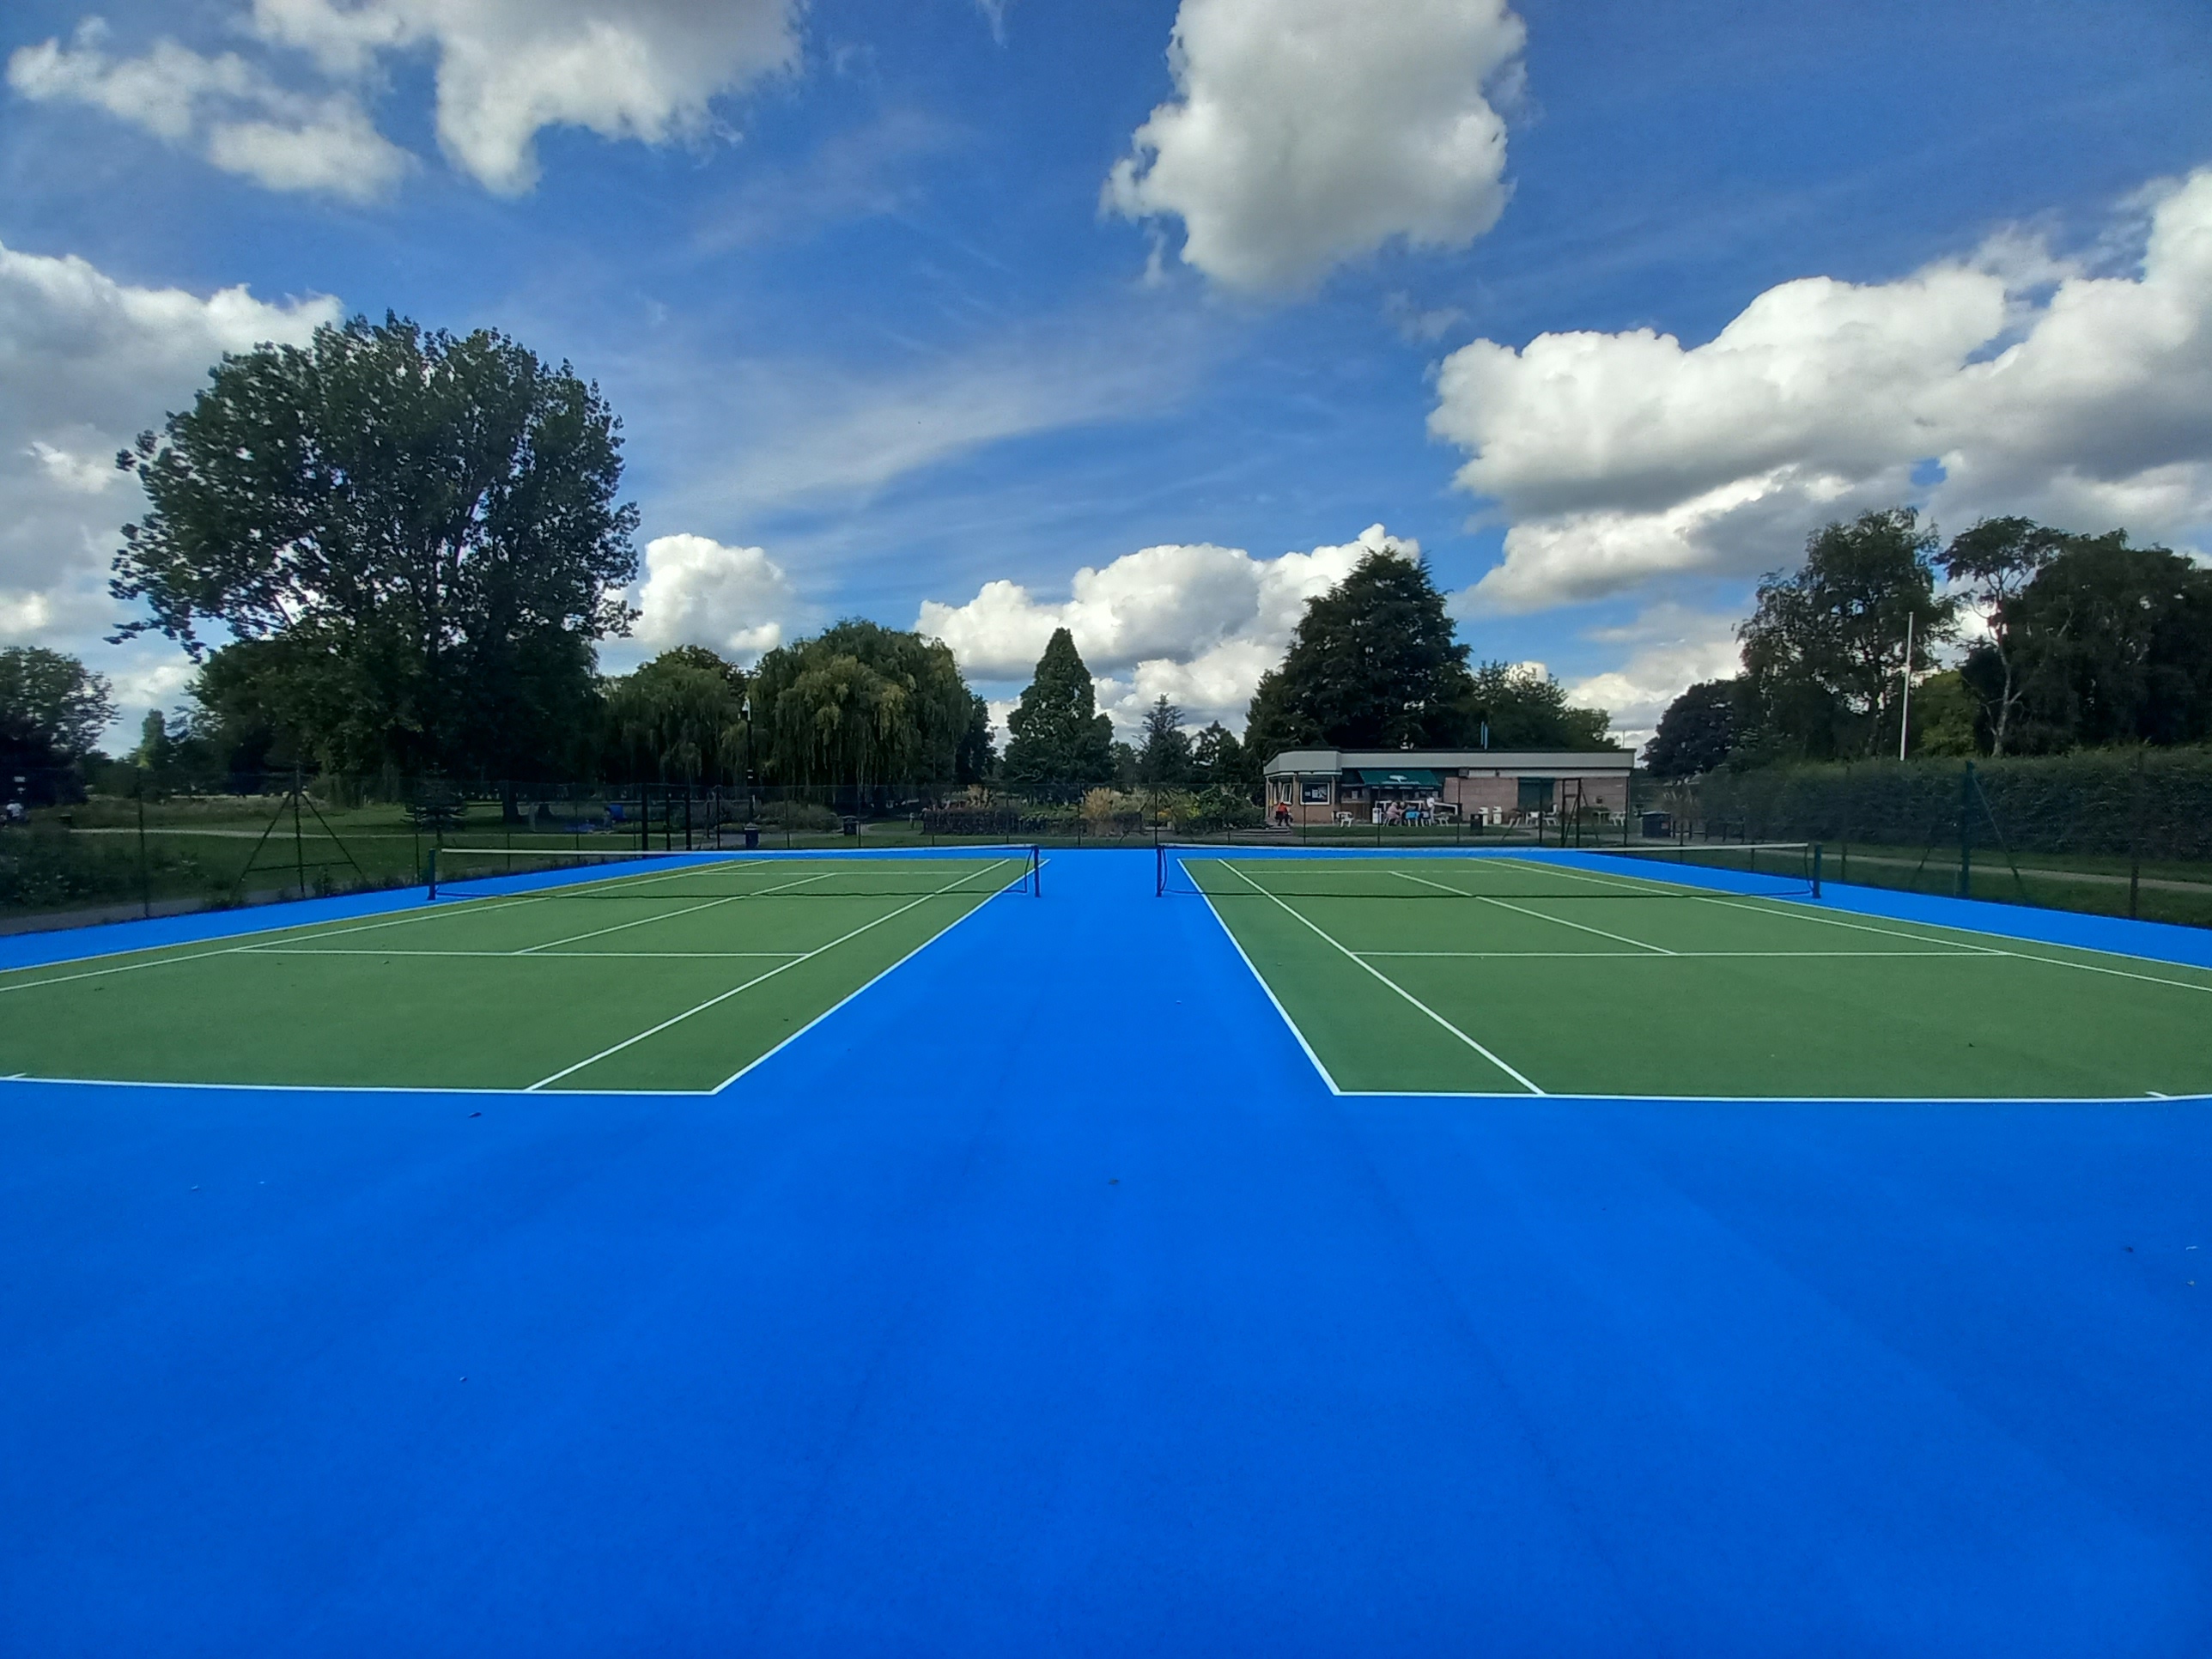 Refurbished Tennis Courts reopen in Sanders Park